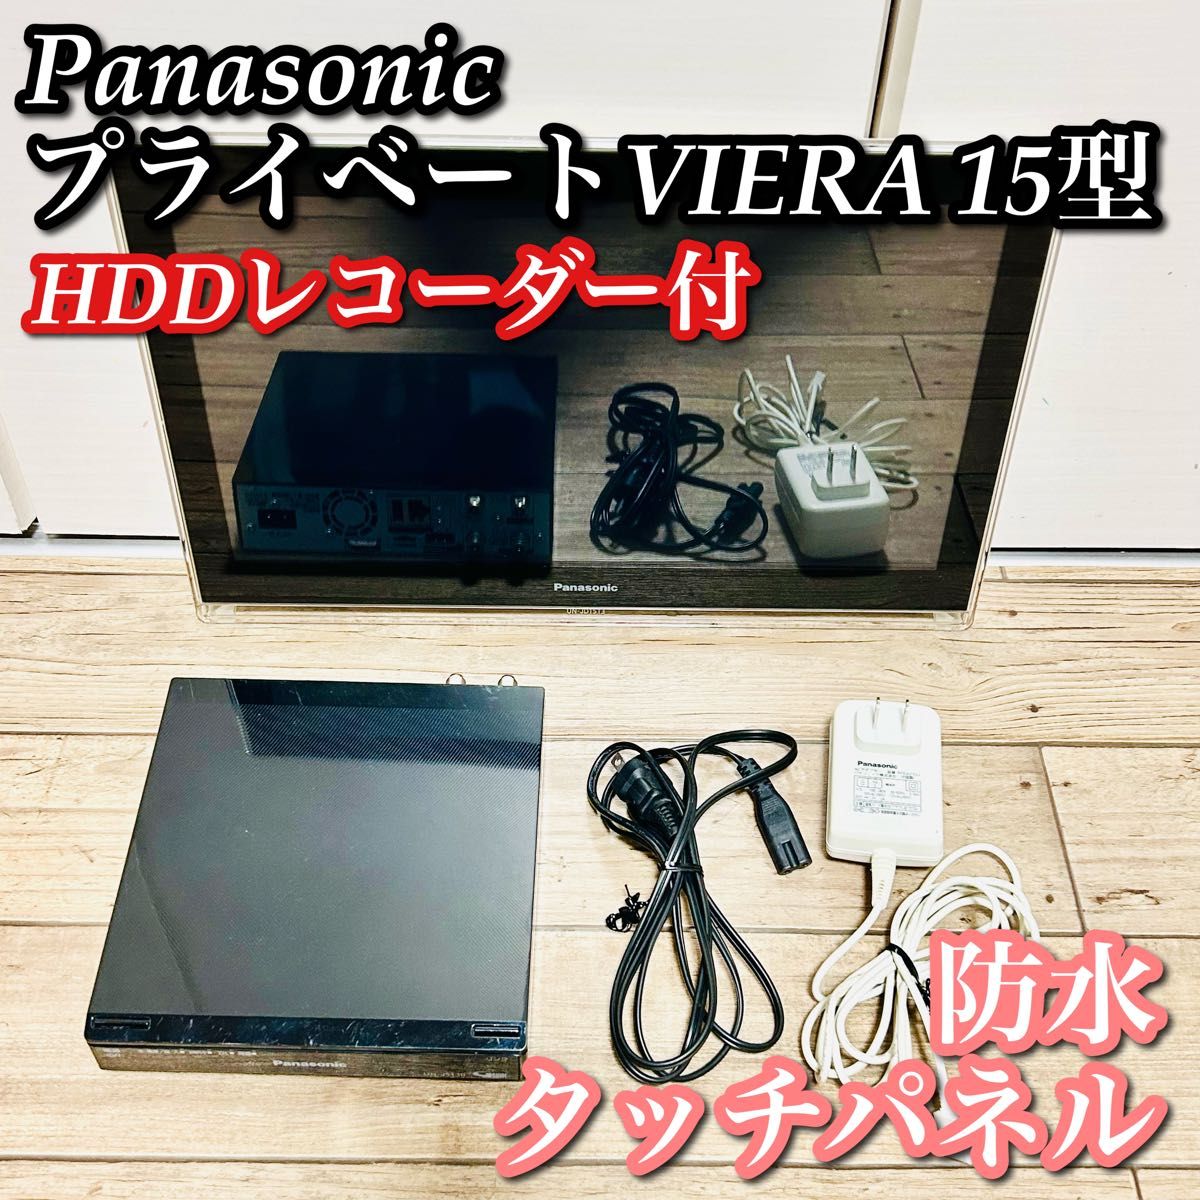 Panasonic テレビ 15型 防水 HDDレコーダー付 UN-JD15T3